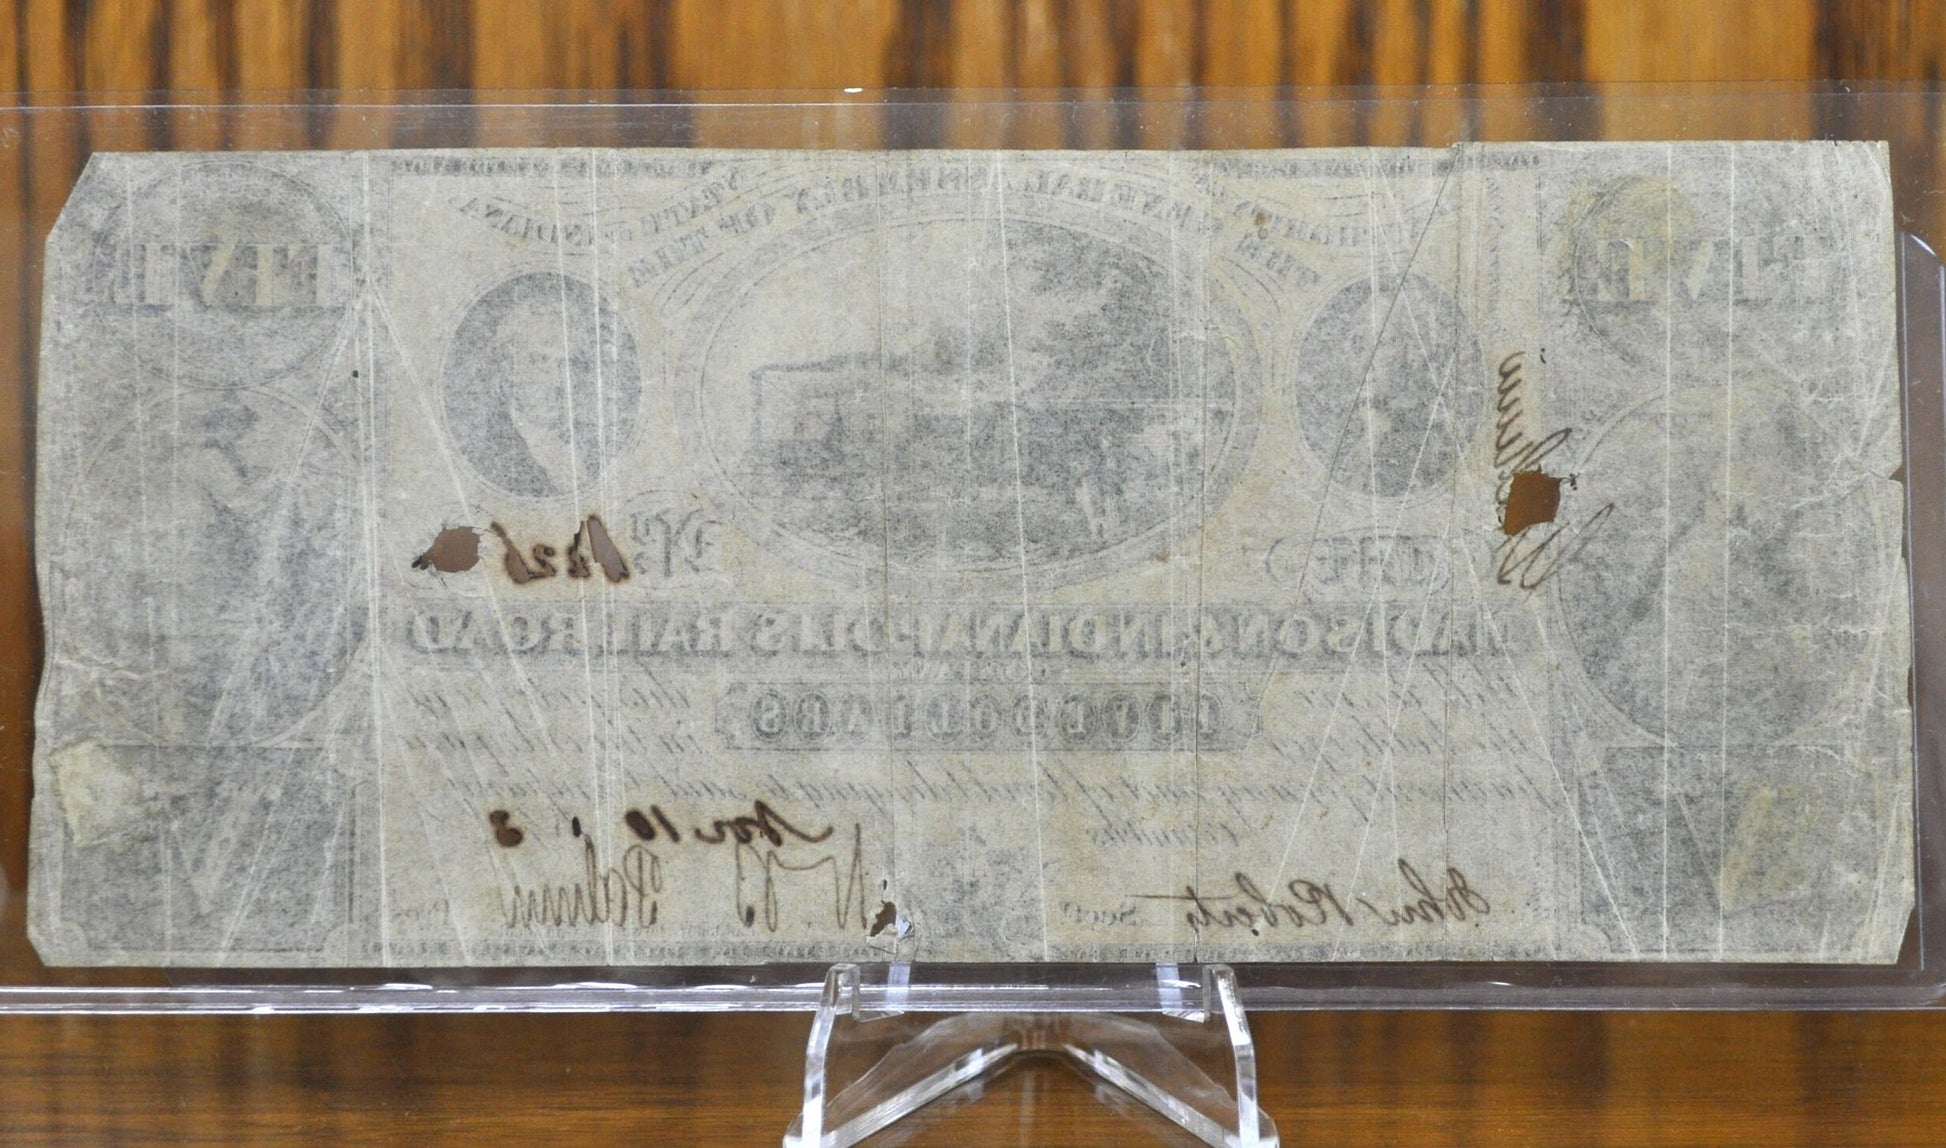 Rare 1843 5 Dollar Banknote Madison and Indianapolis Railroad - Scarce - Five Dollar Note I&M Railroad 1840s